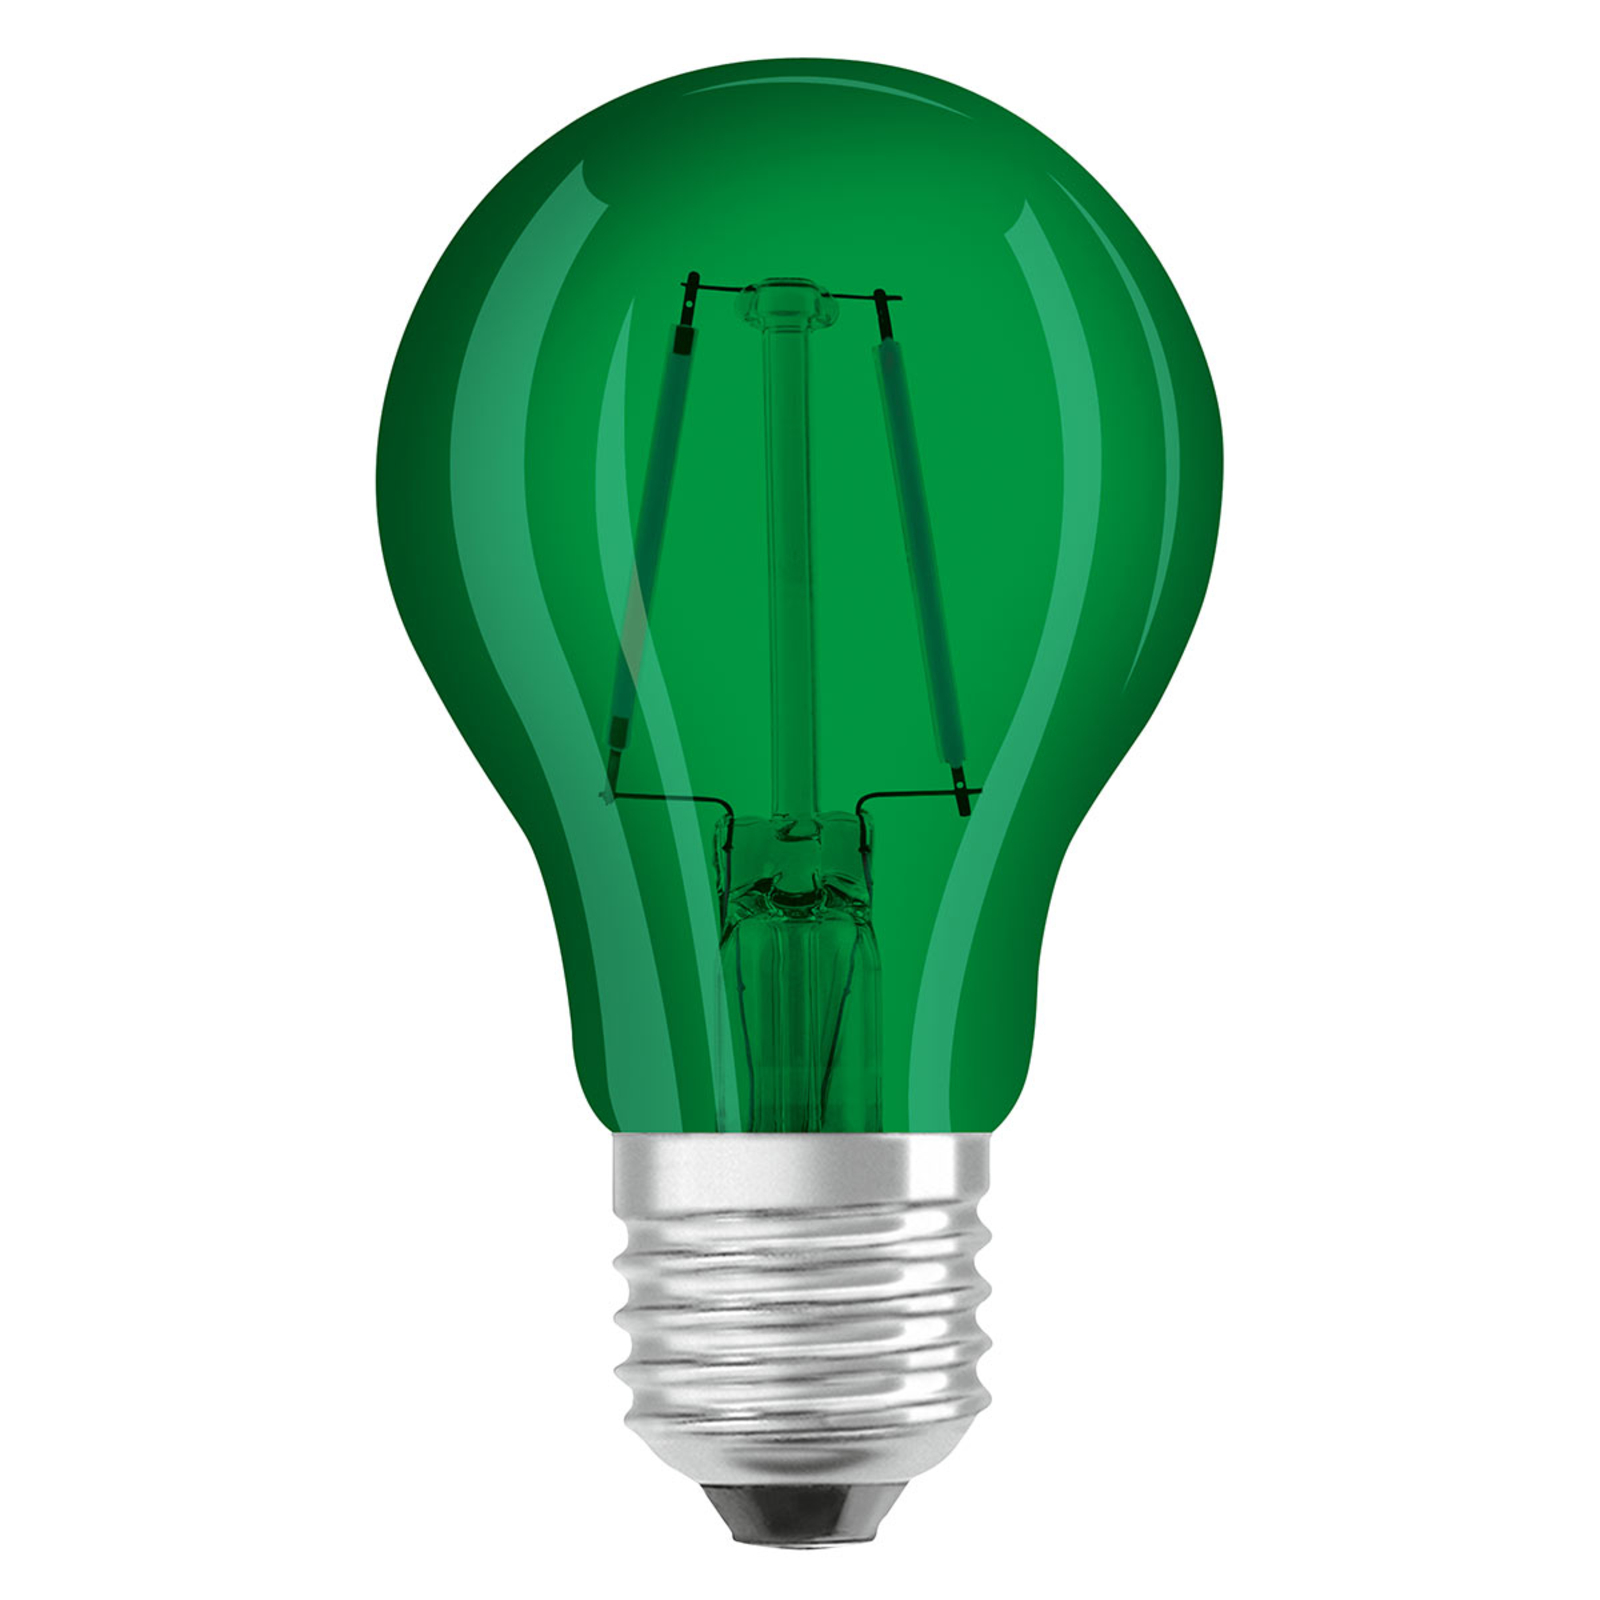 Raap Donau meesteres OSRAM LED lamp E27 Star Décor Cla A 2,5W, groen | Lampen24.be